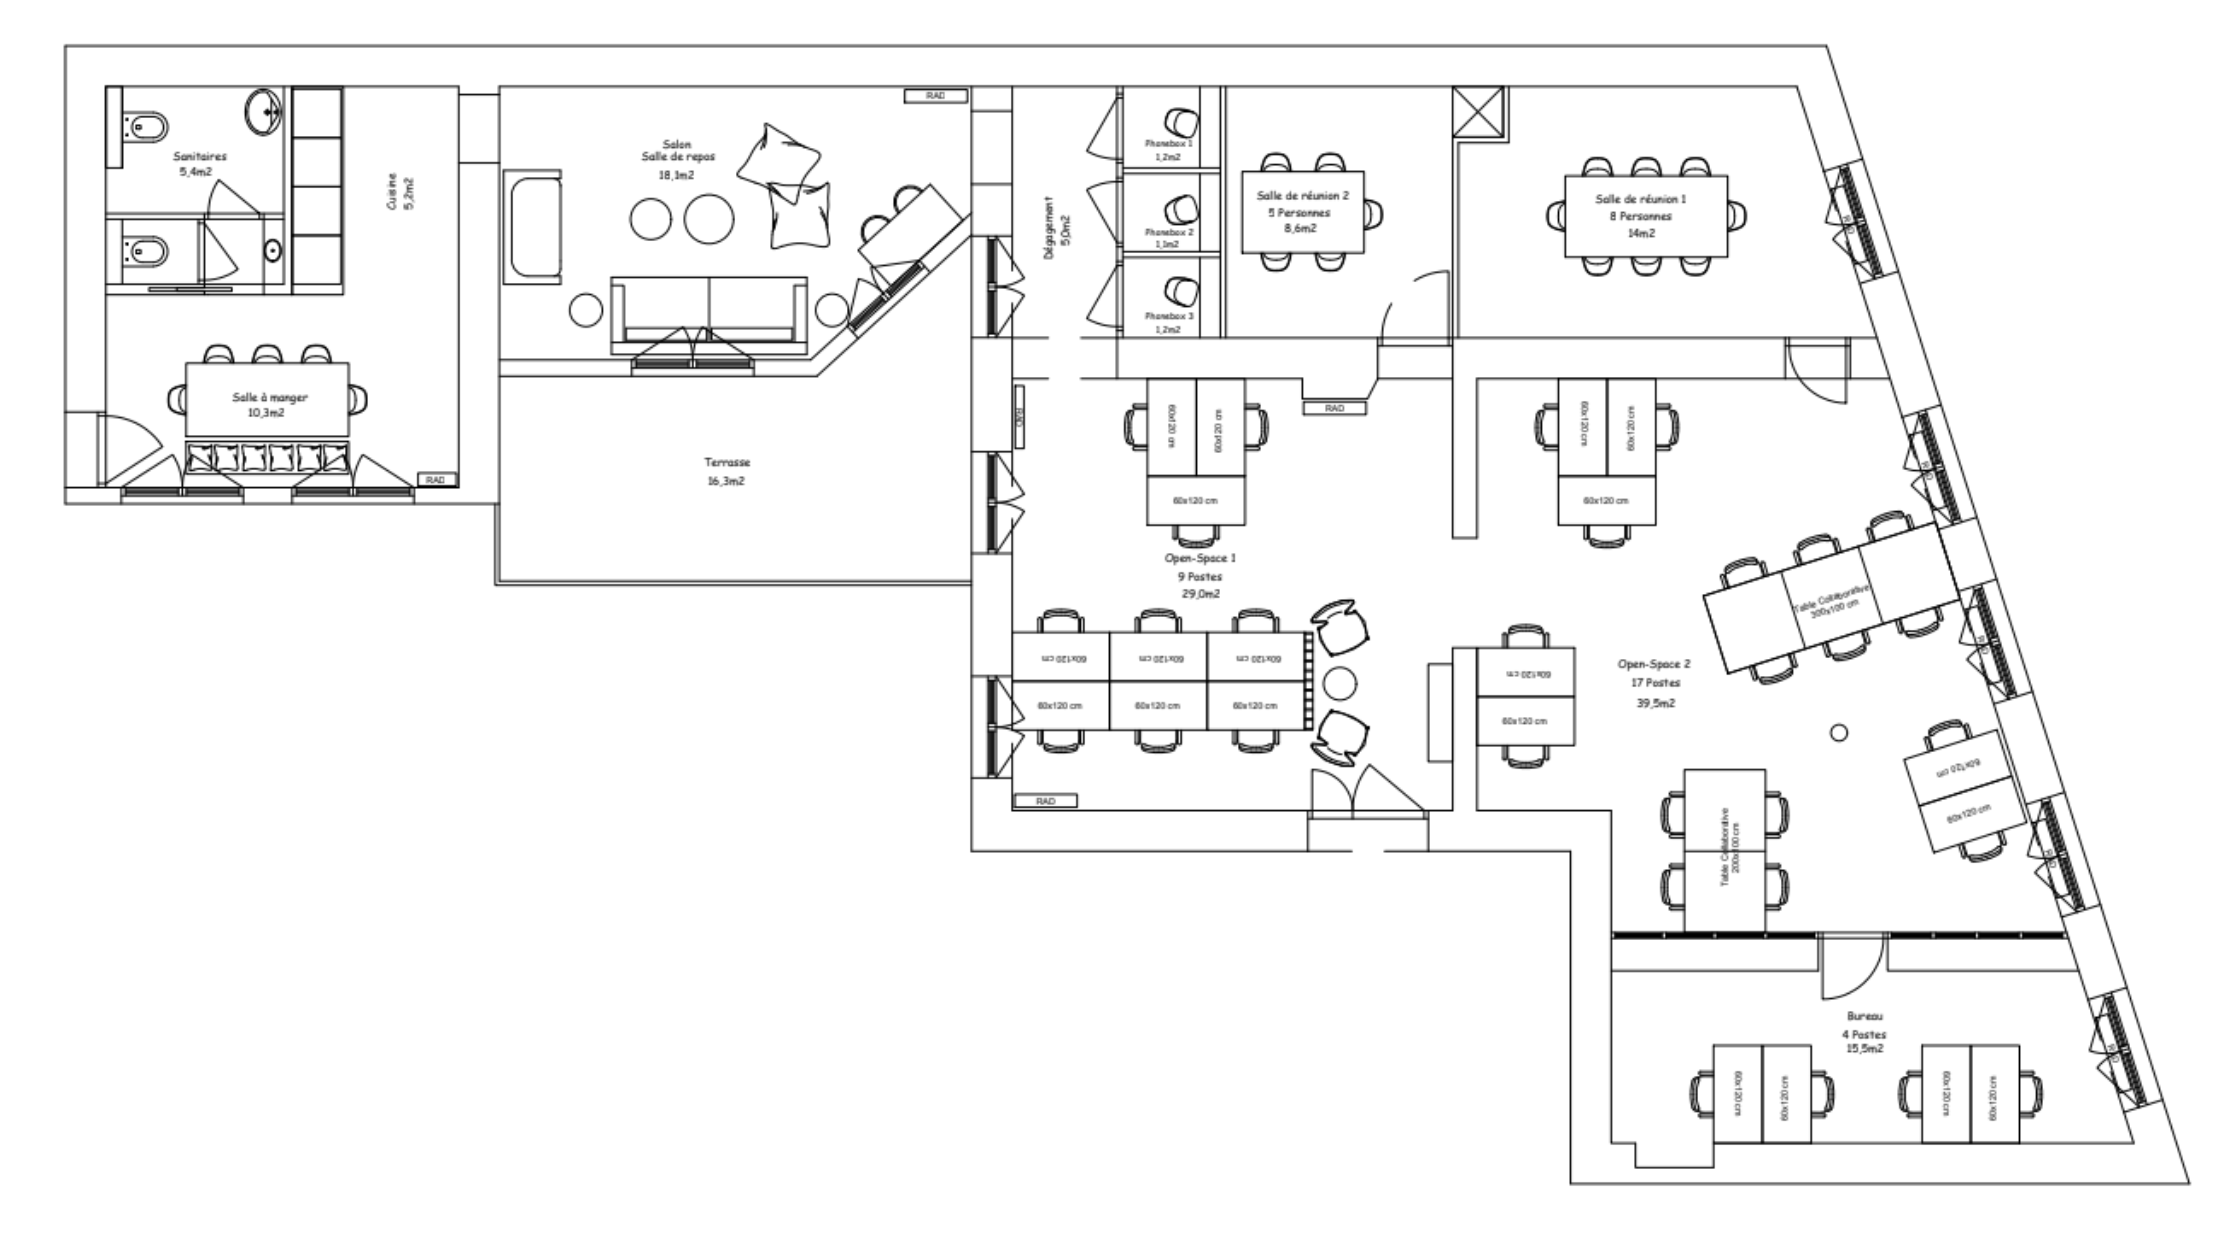 the office floor plan